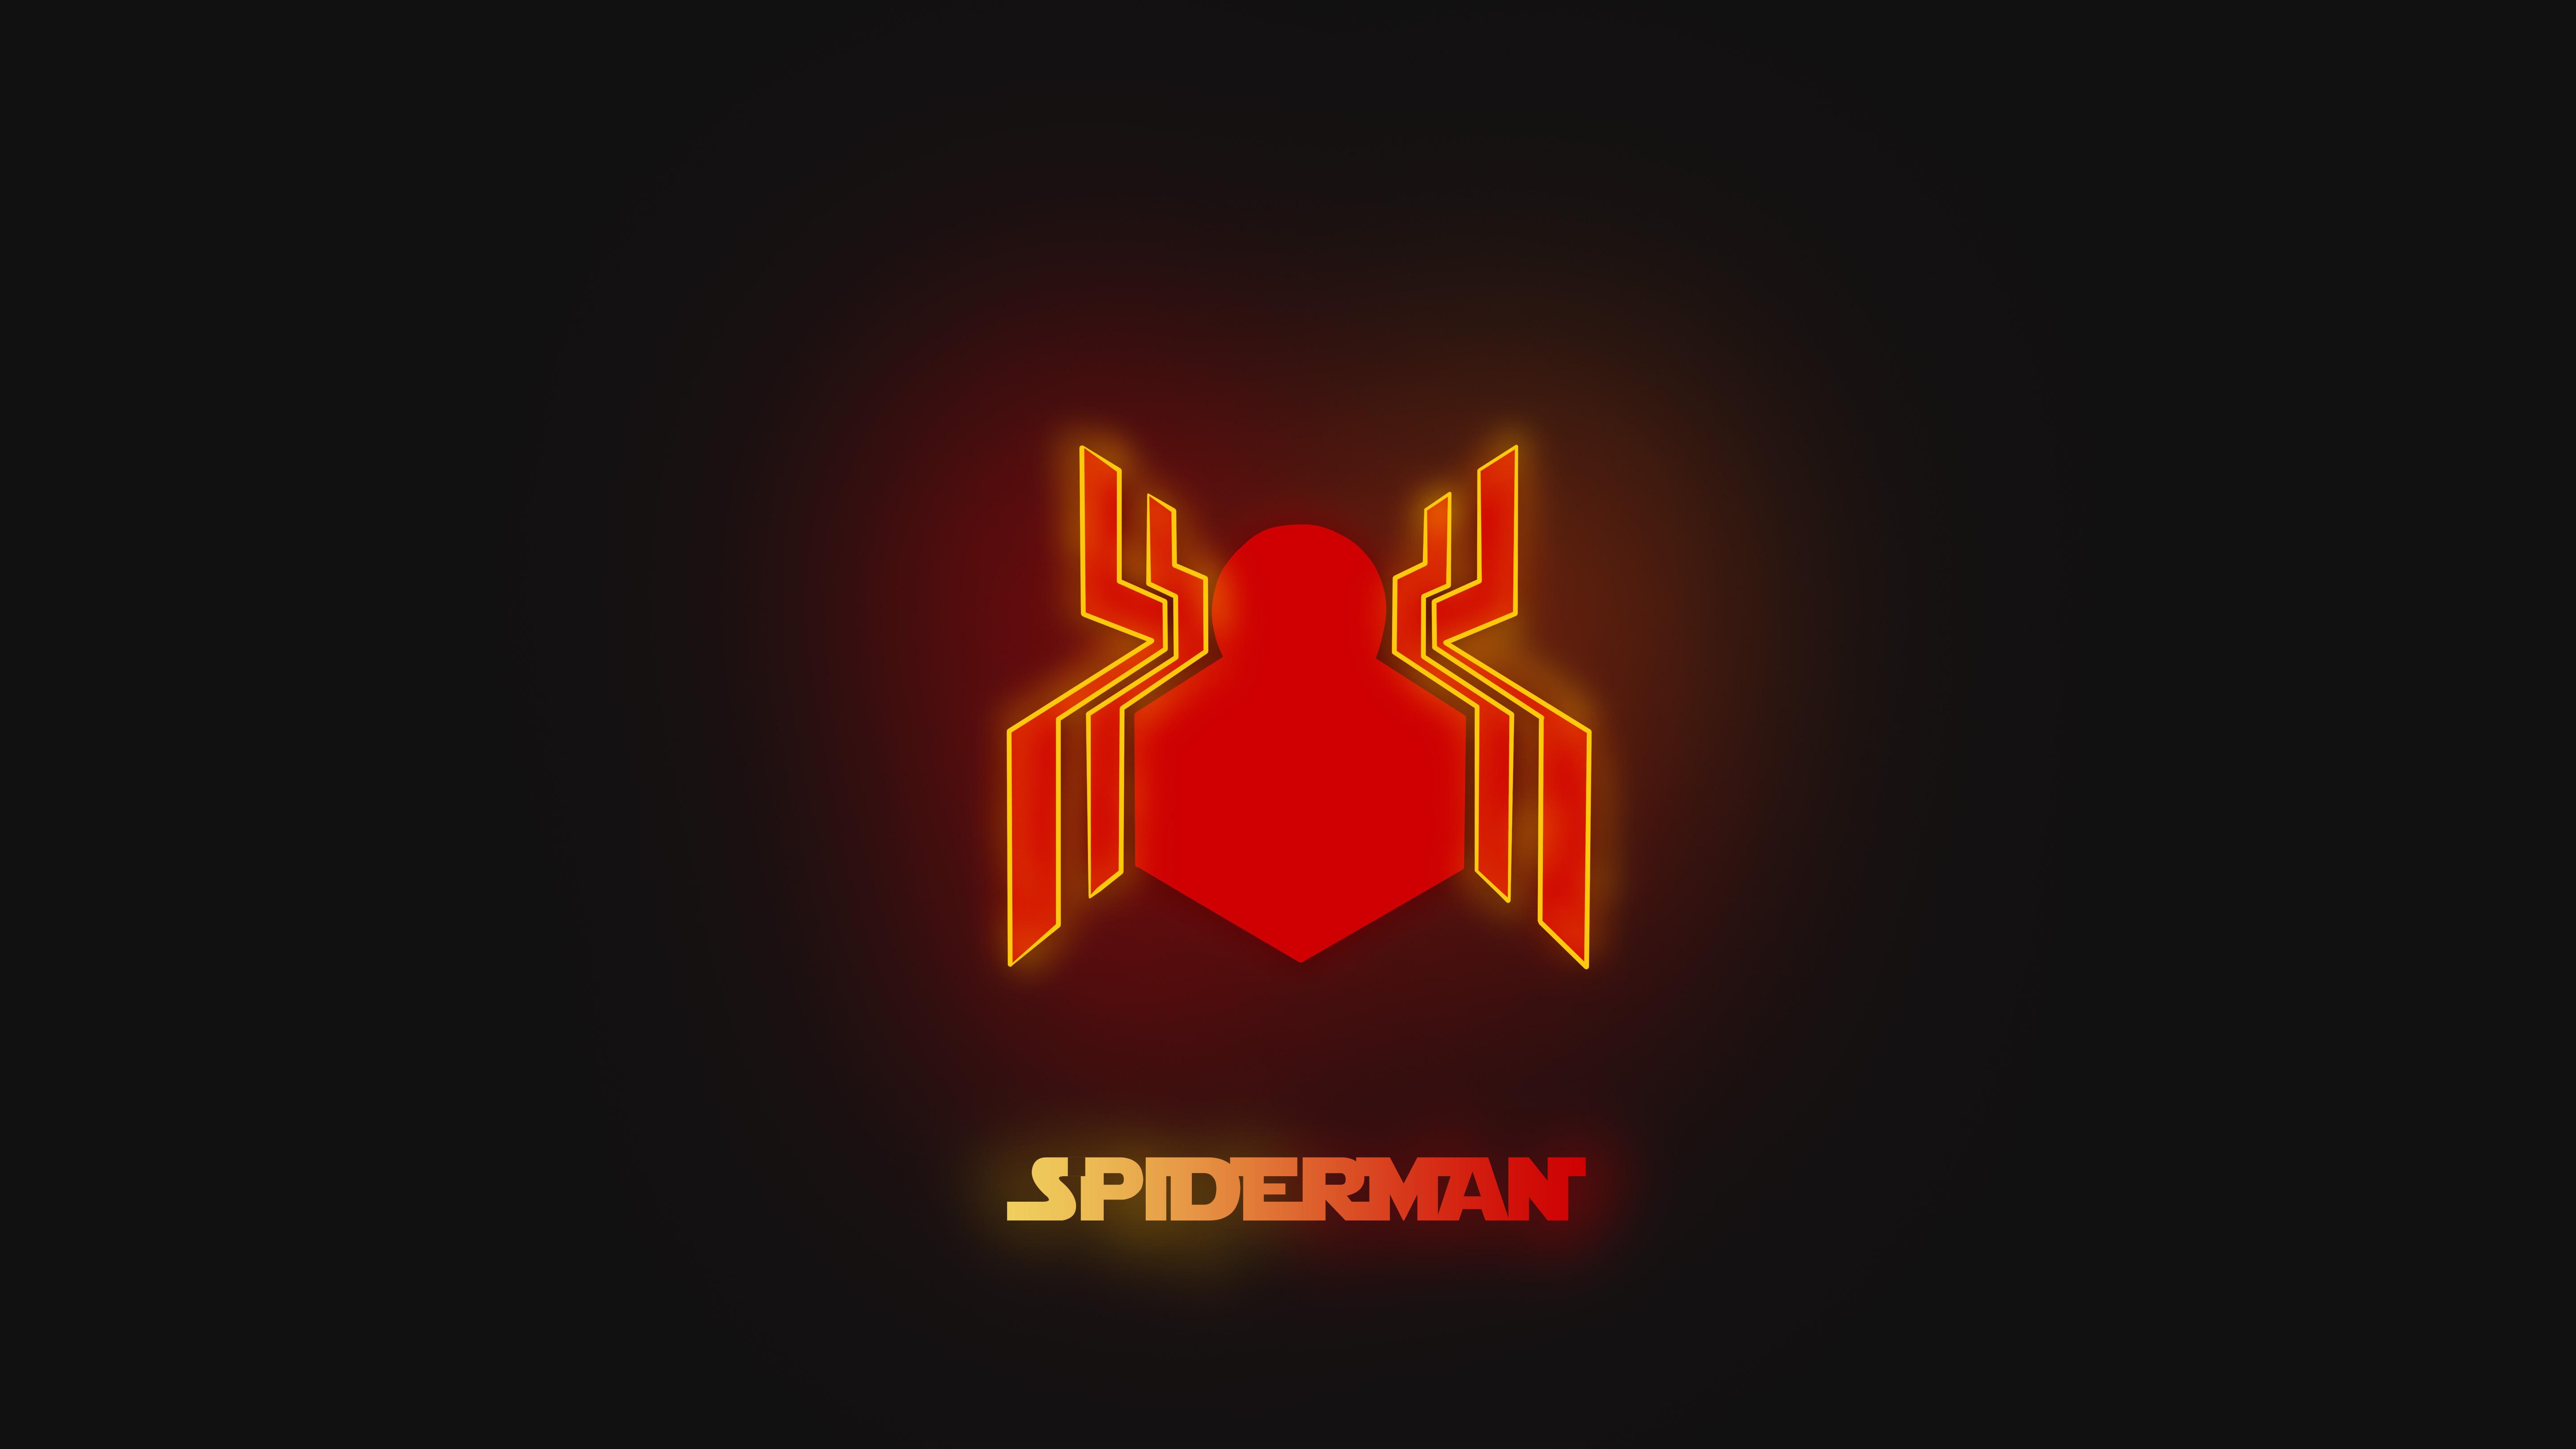 Neon Spiderman Logo, HD Superheroes, 4k Wallpaper, Image